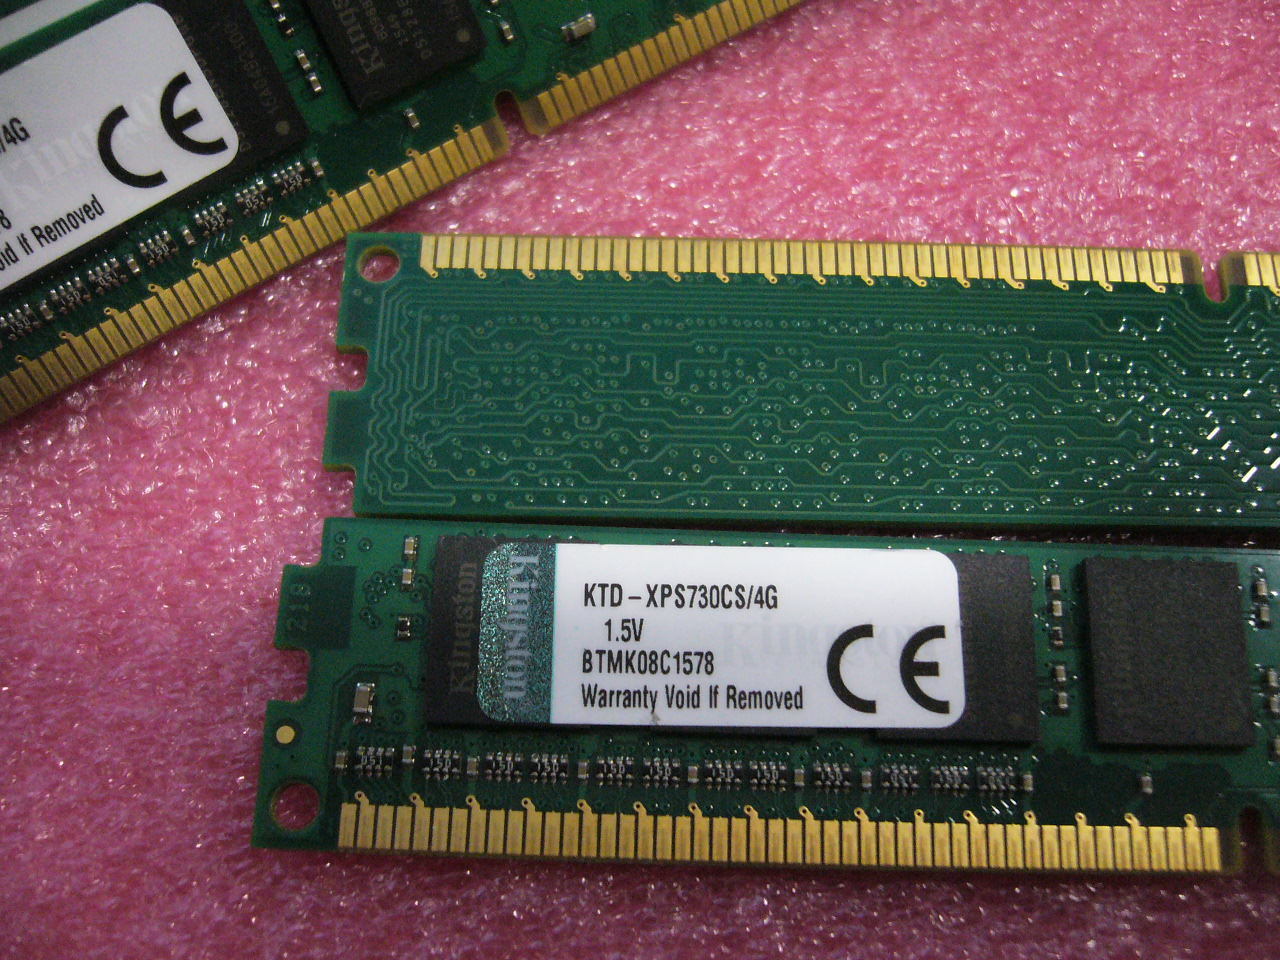 QTY 1x 4GB DDR3 PC3-12800 non-ECC desktop memory Kingston 9905584-017.A00LF - zum Schließen ins Bild klicken